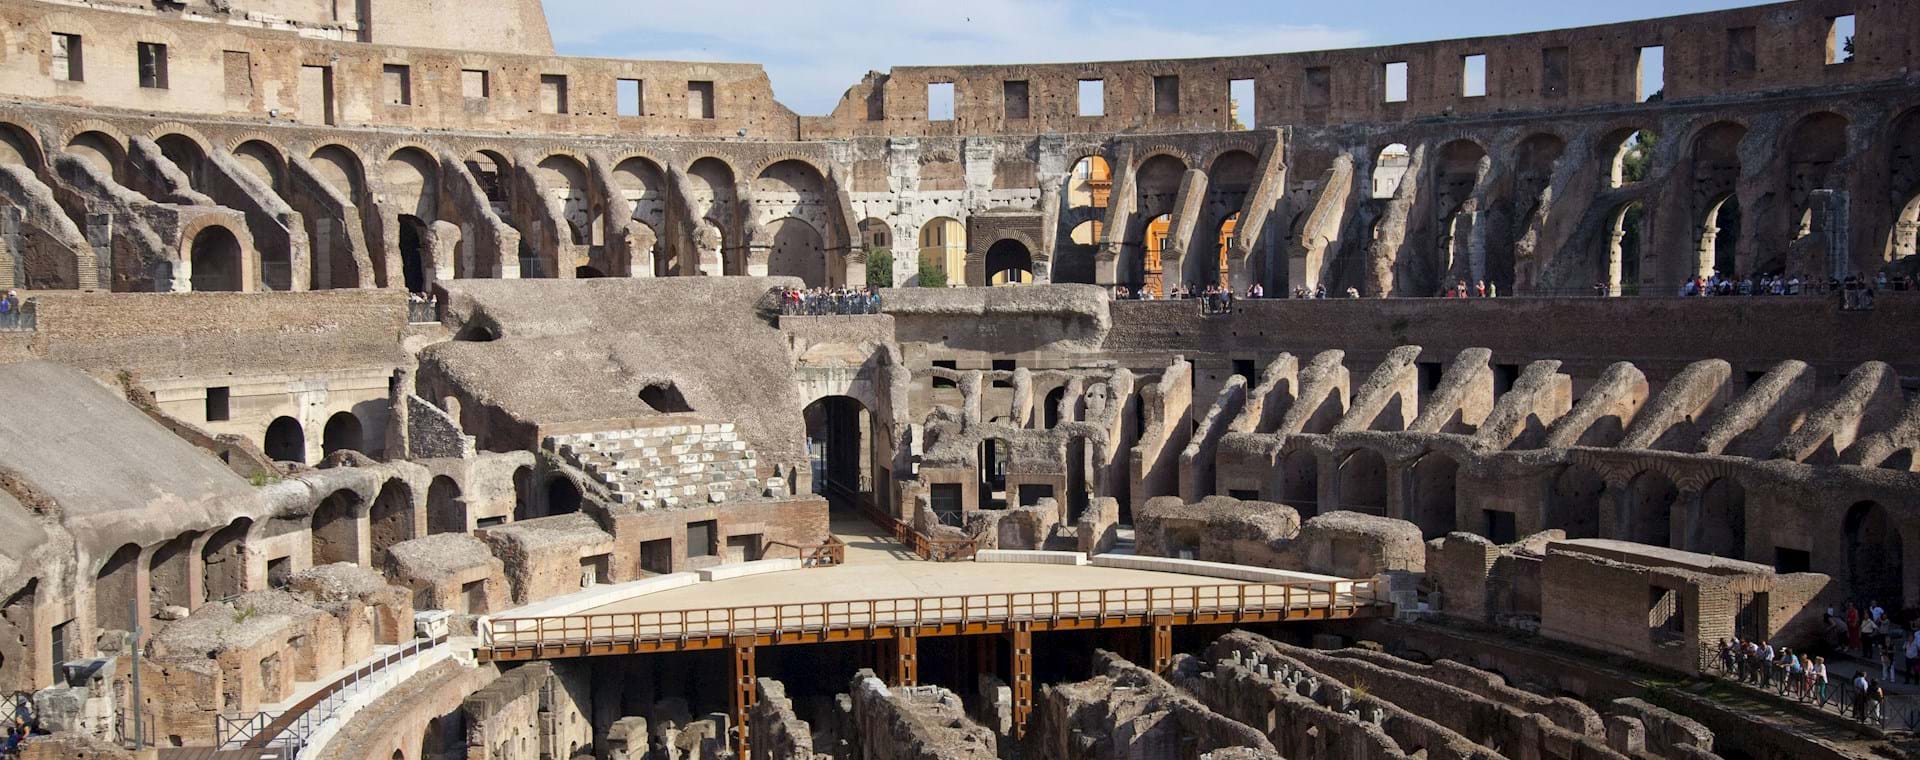 Arena Floor Colosseum